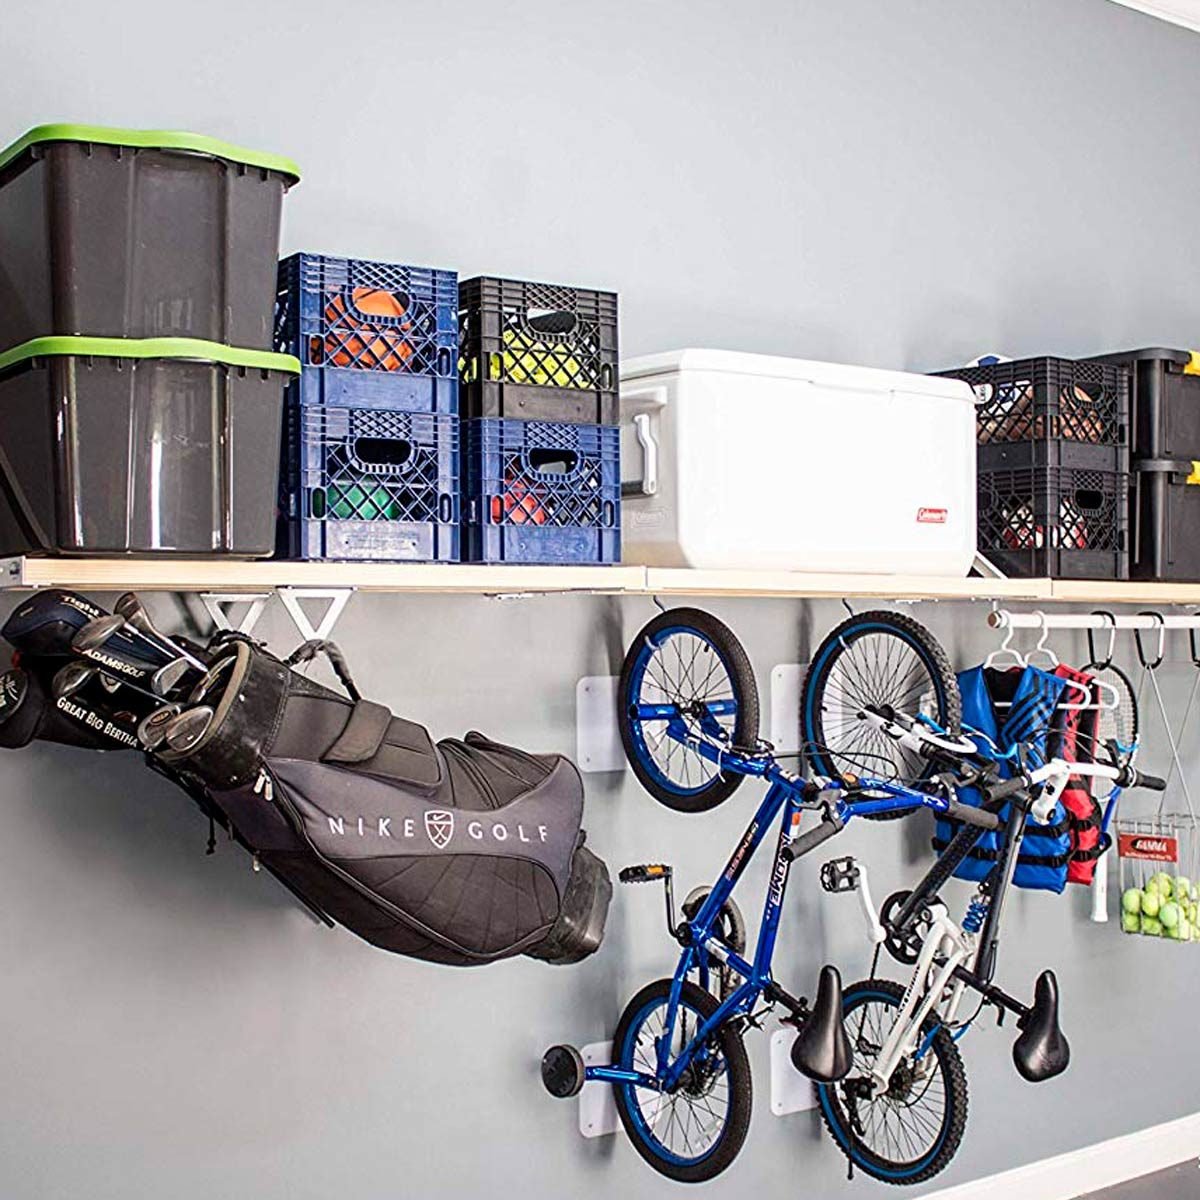 15 Game-Changing Garage Storage Products | Family Handyman